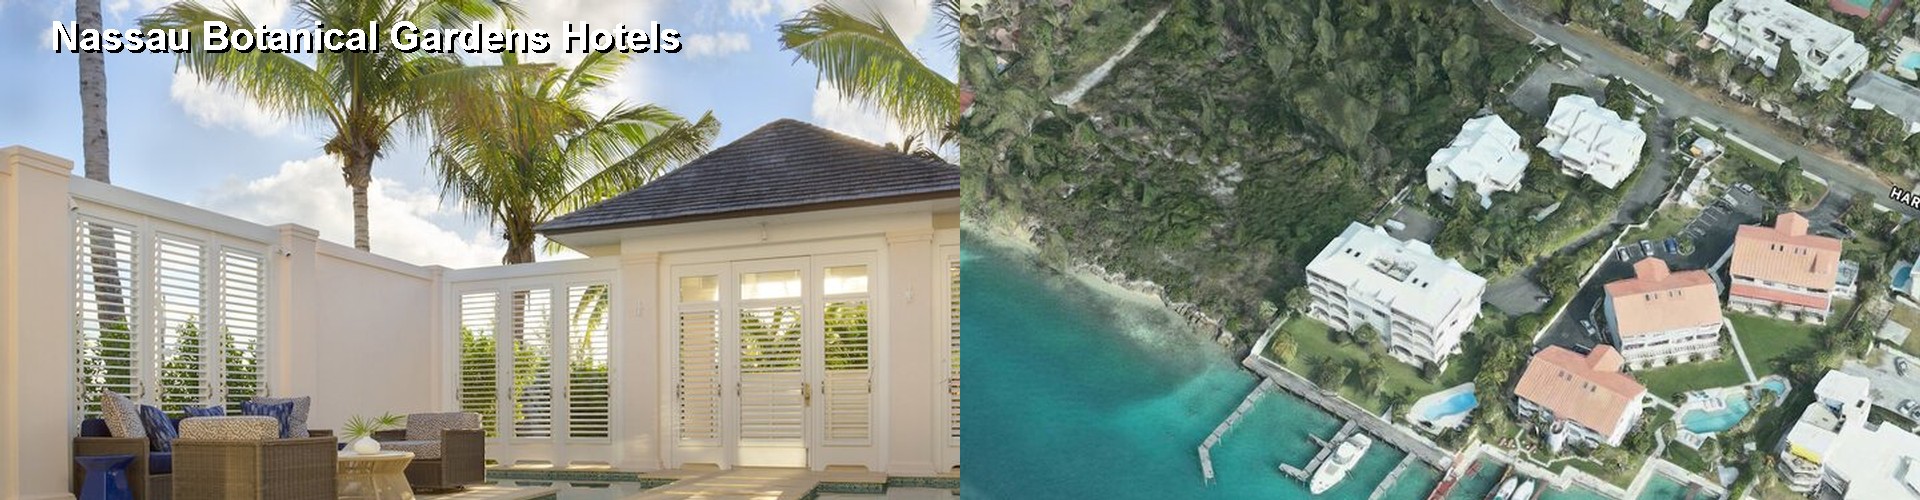 5 Best Hotels near Nassau Botanical Gardens